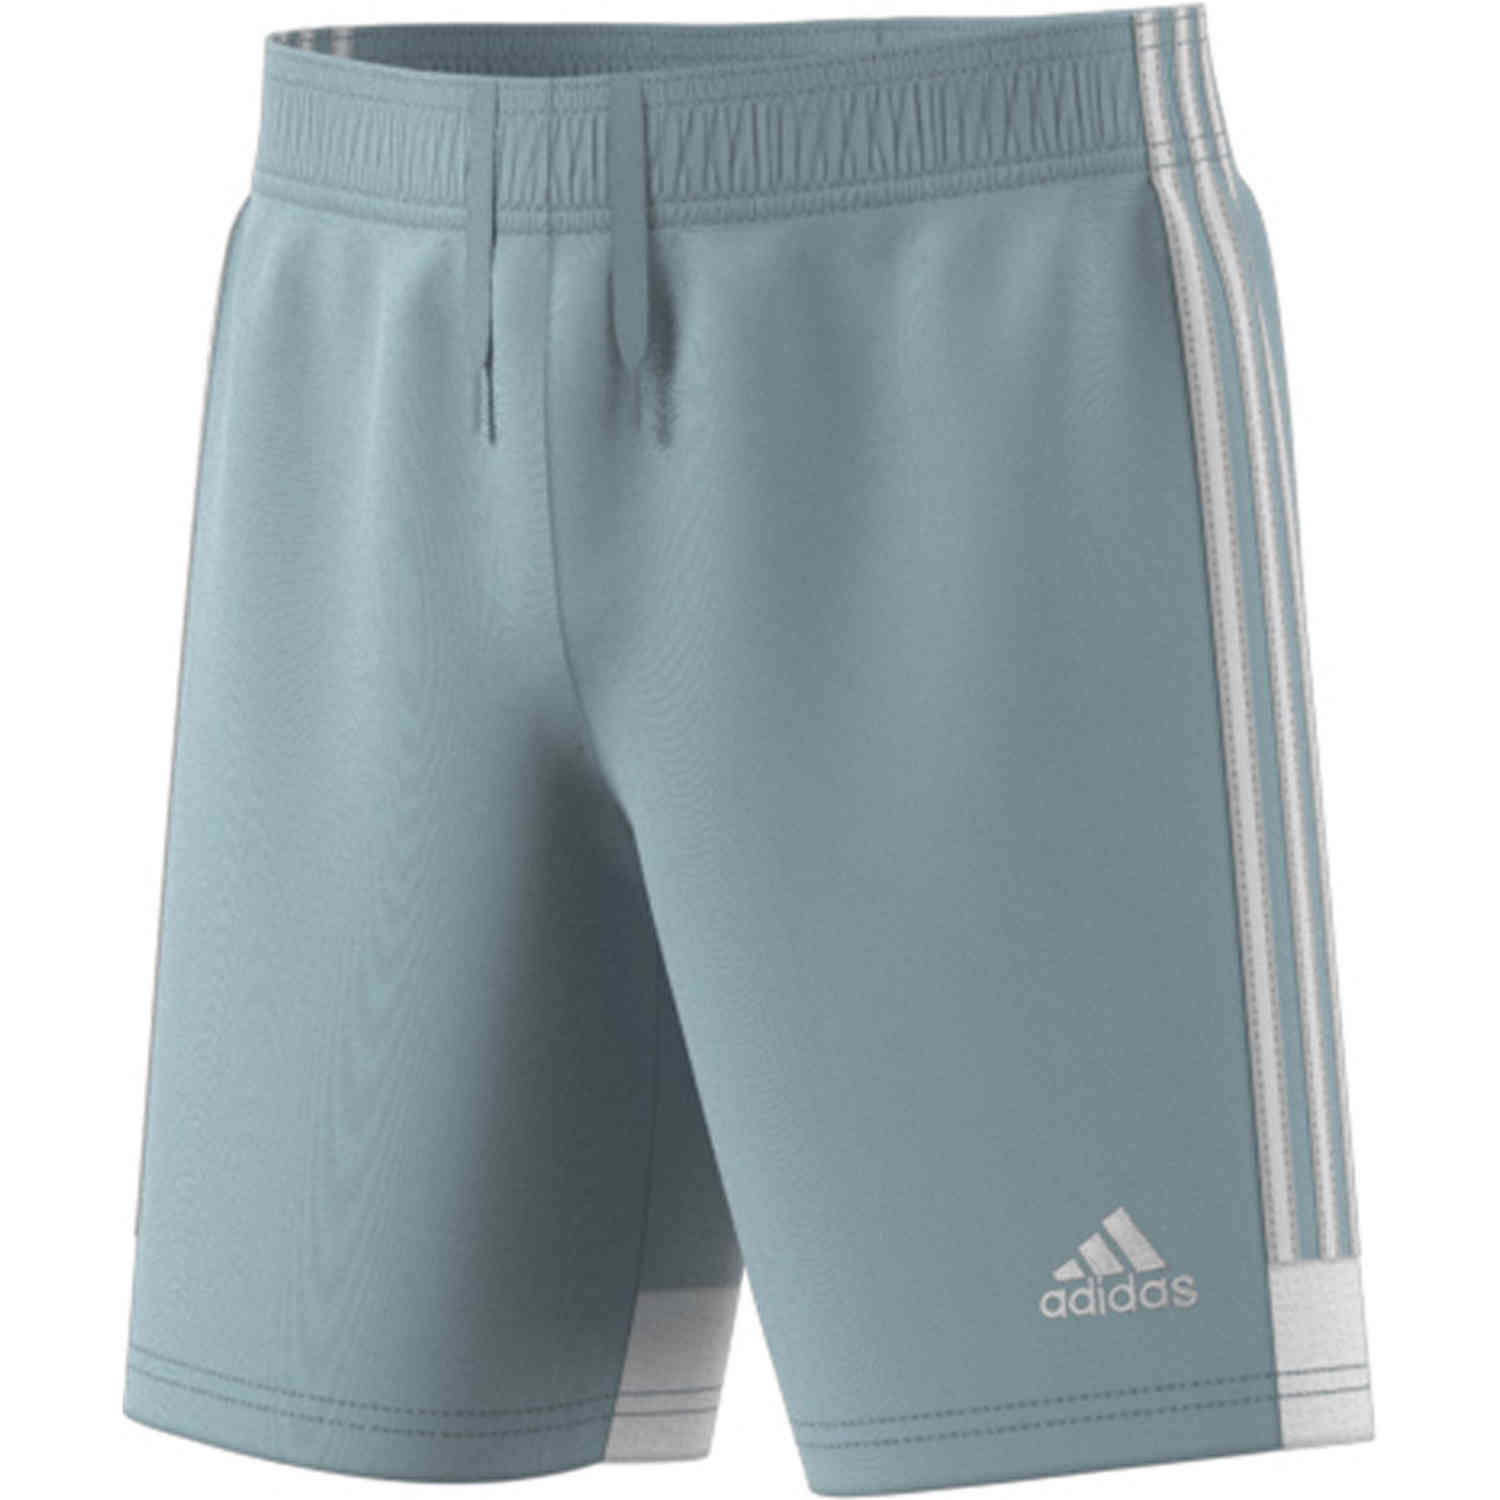 light grey adidas shorts